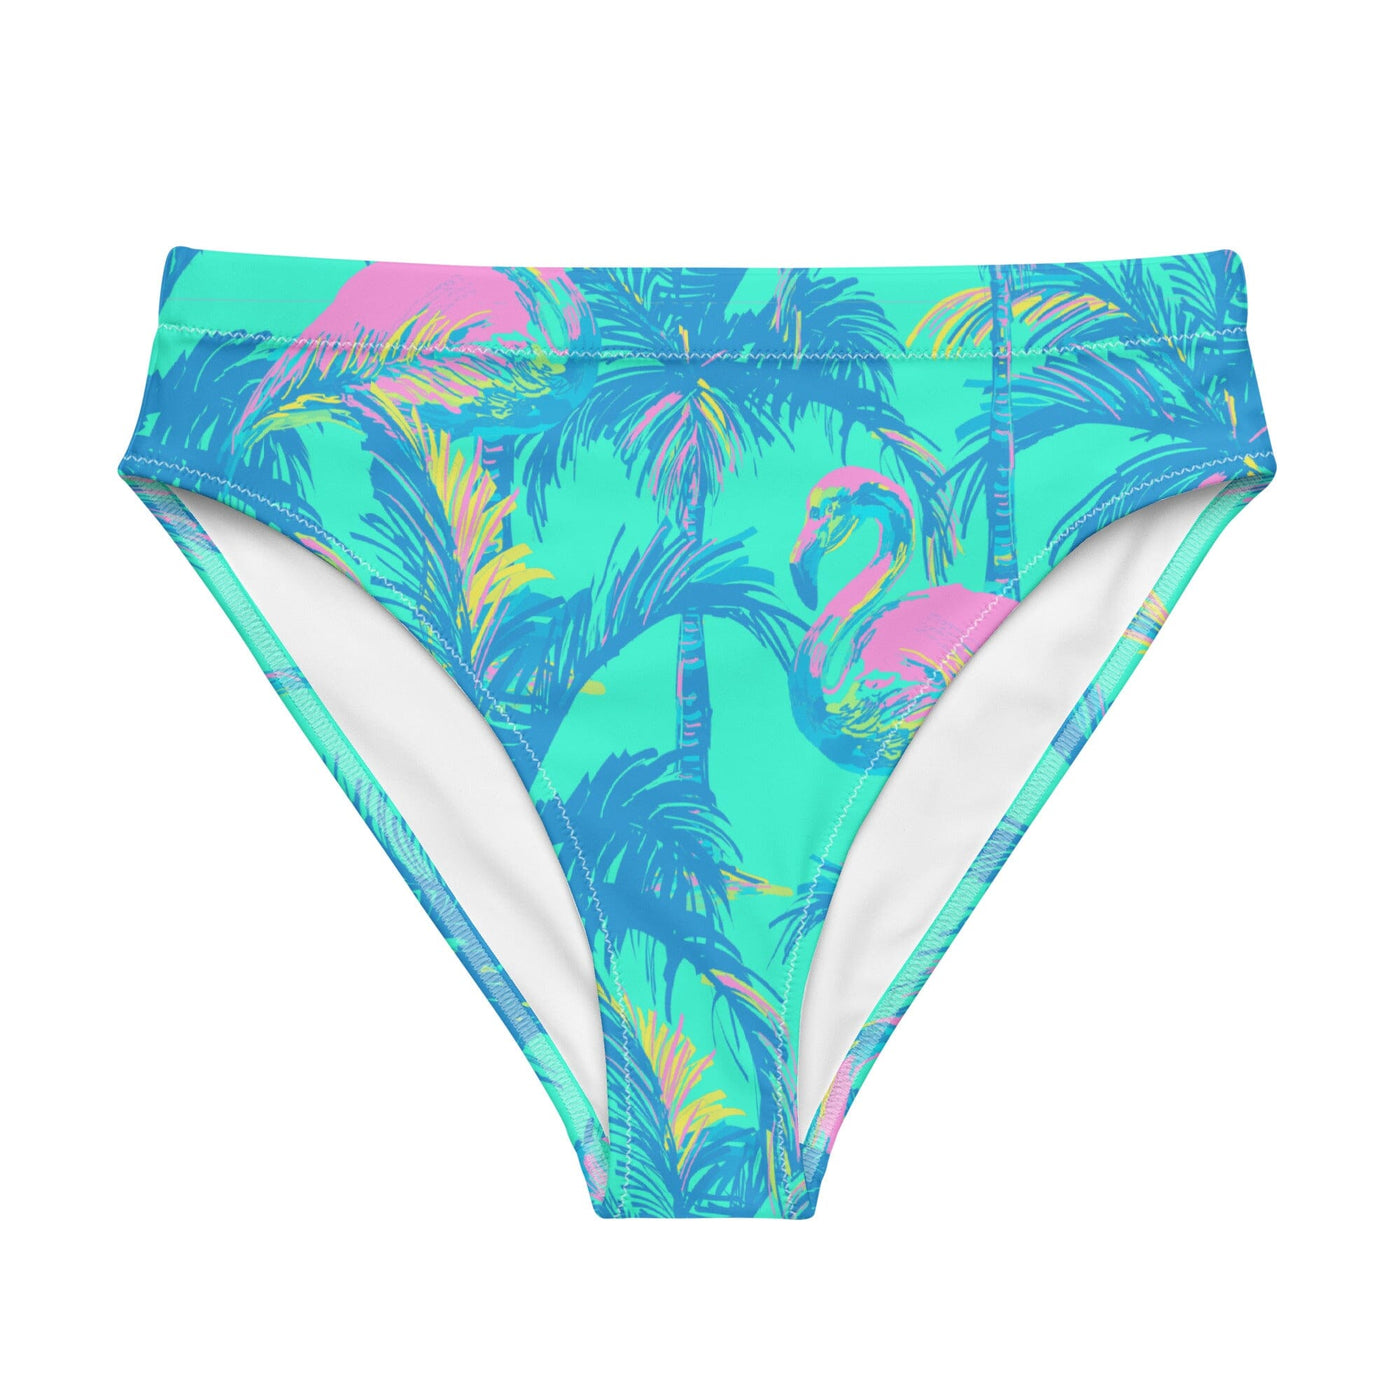 Resort Life Bikini Bottom - Coastal Cool - Swimwear and Beachwear - Recycled fabrics